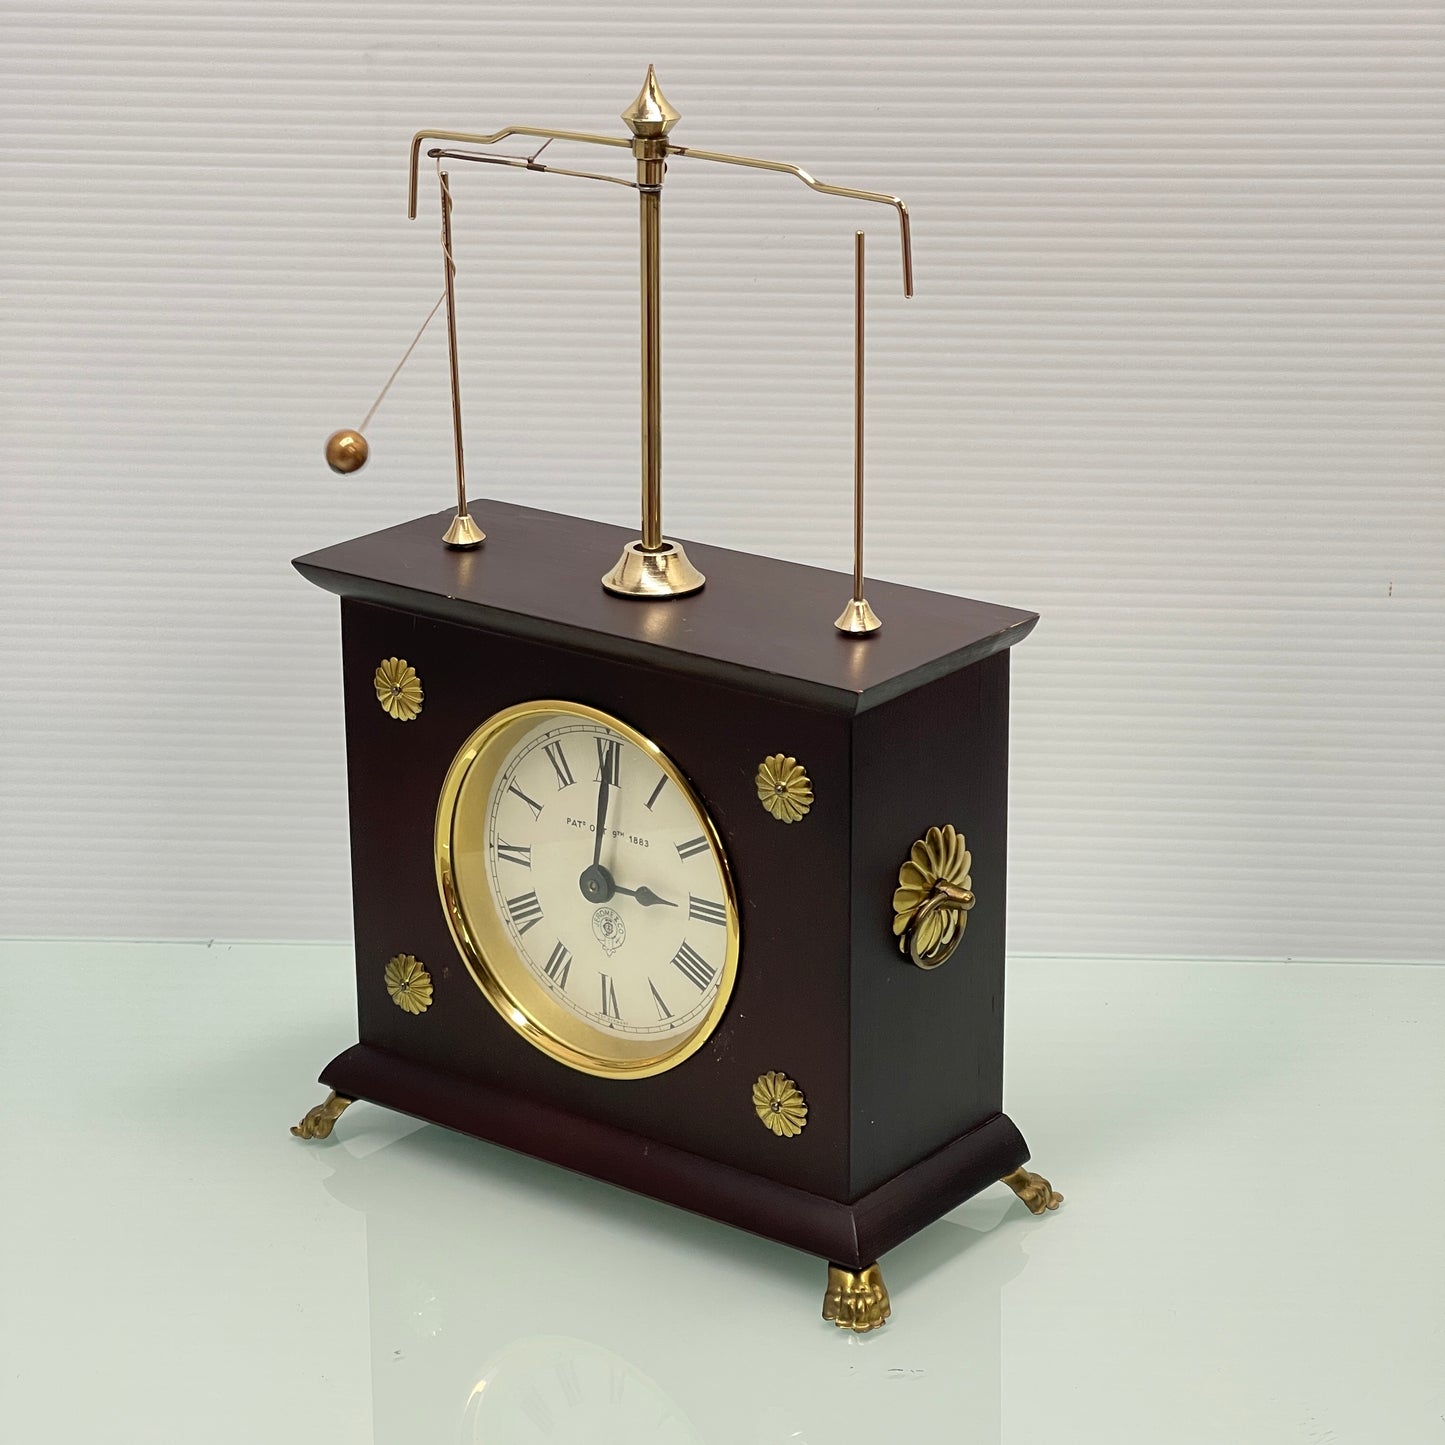 Jerome & Co. Flying Pendulum Clock - Brass, Elm, Wood